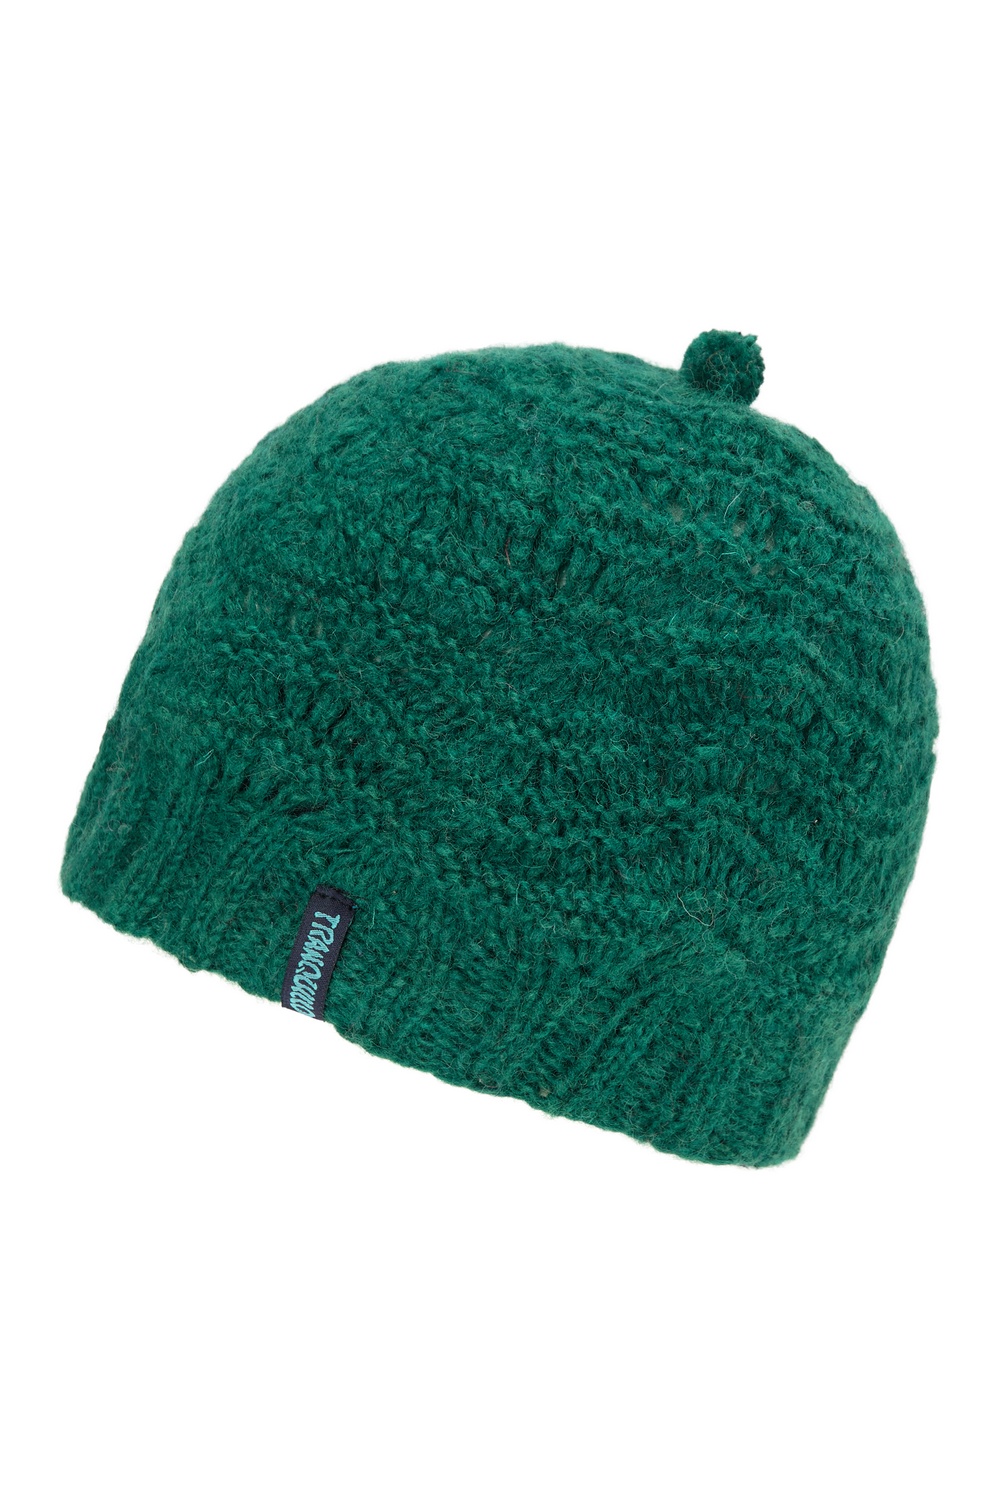 Cappello da donna in lana naturale Blu/Verde